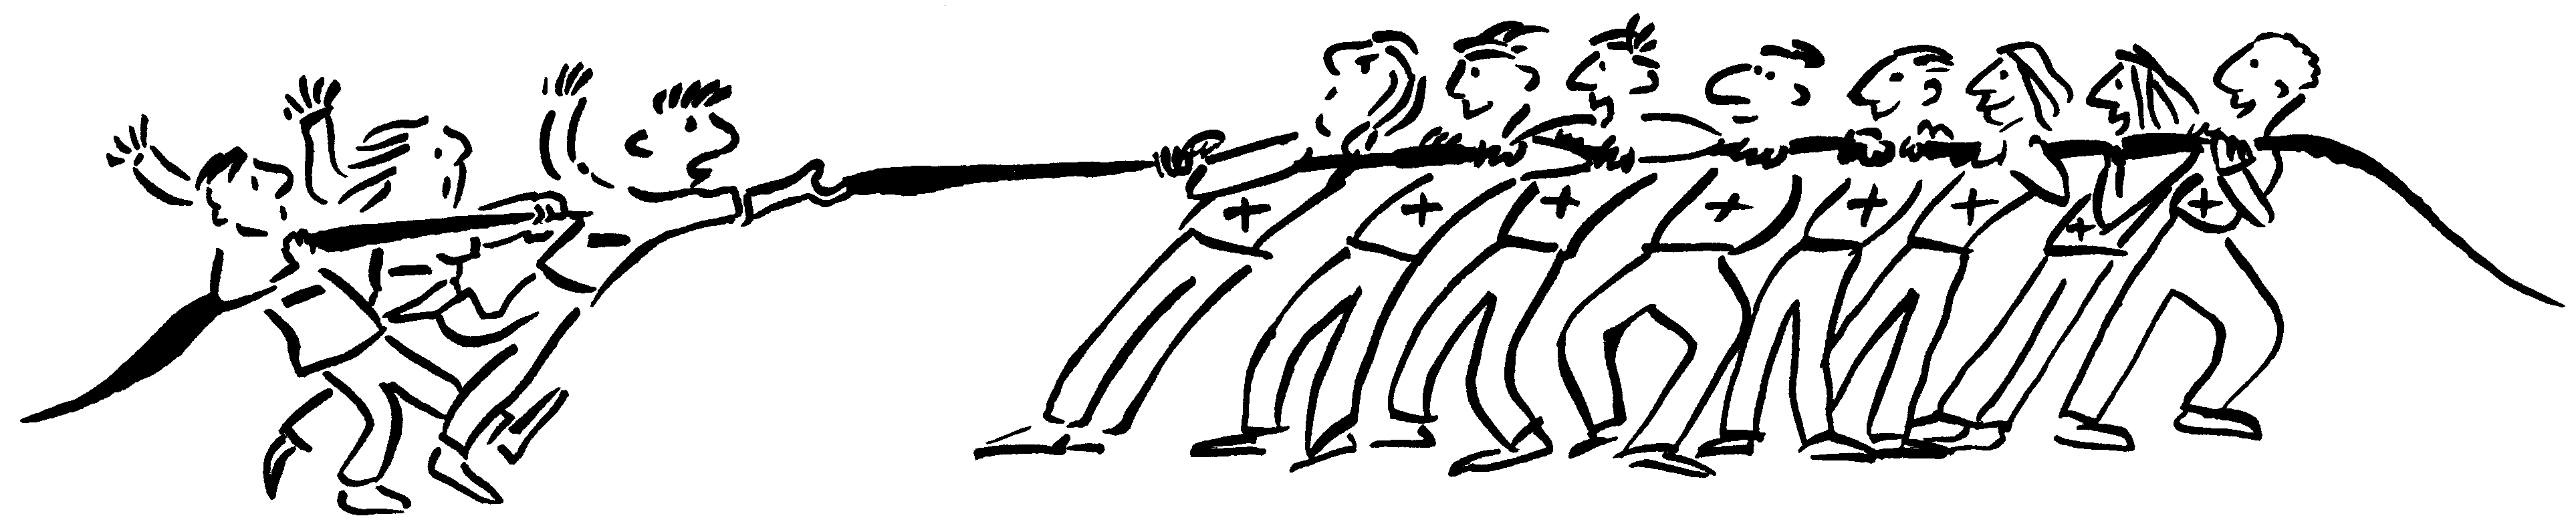 Free Tug O War Cartoon, Download Free Tug O War Cartoon png images